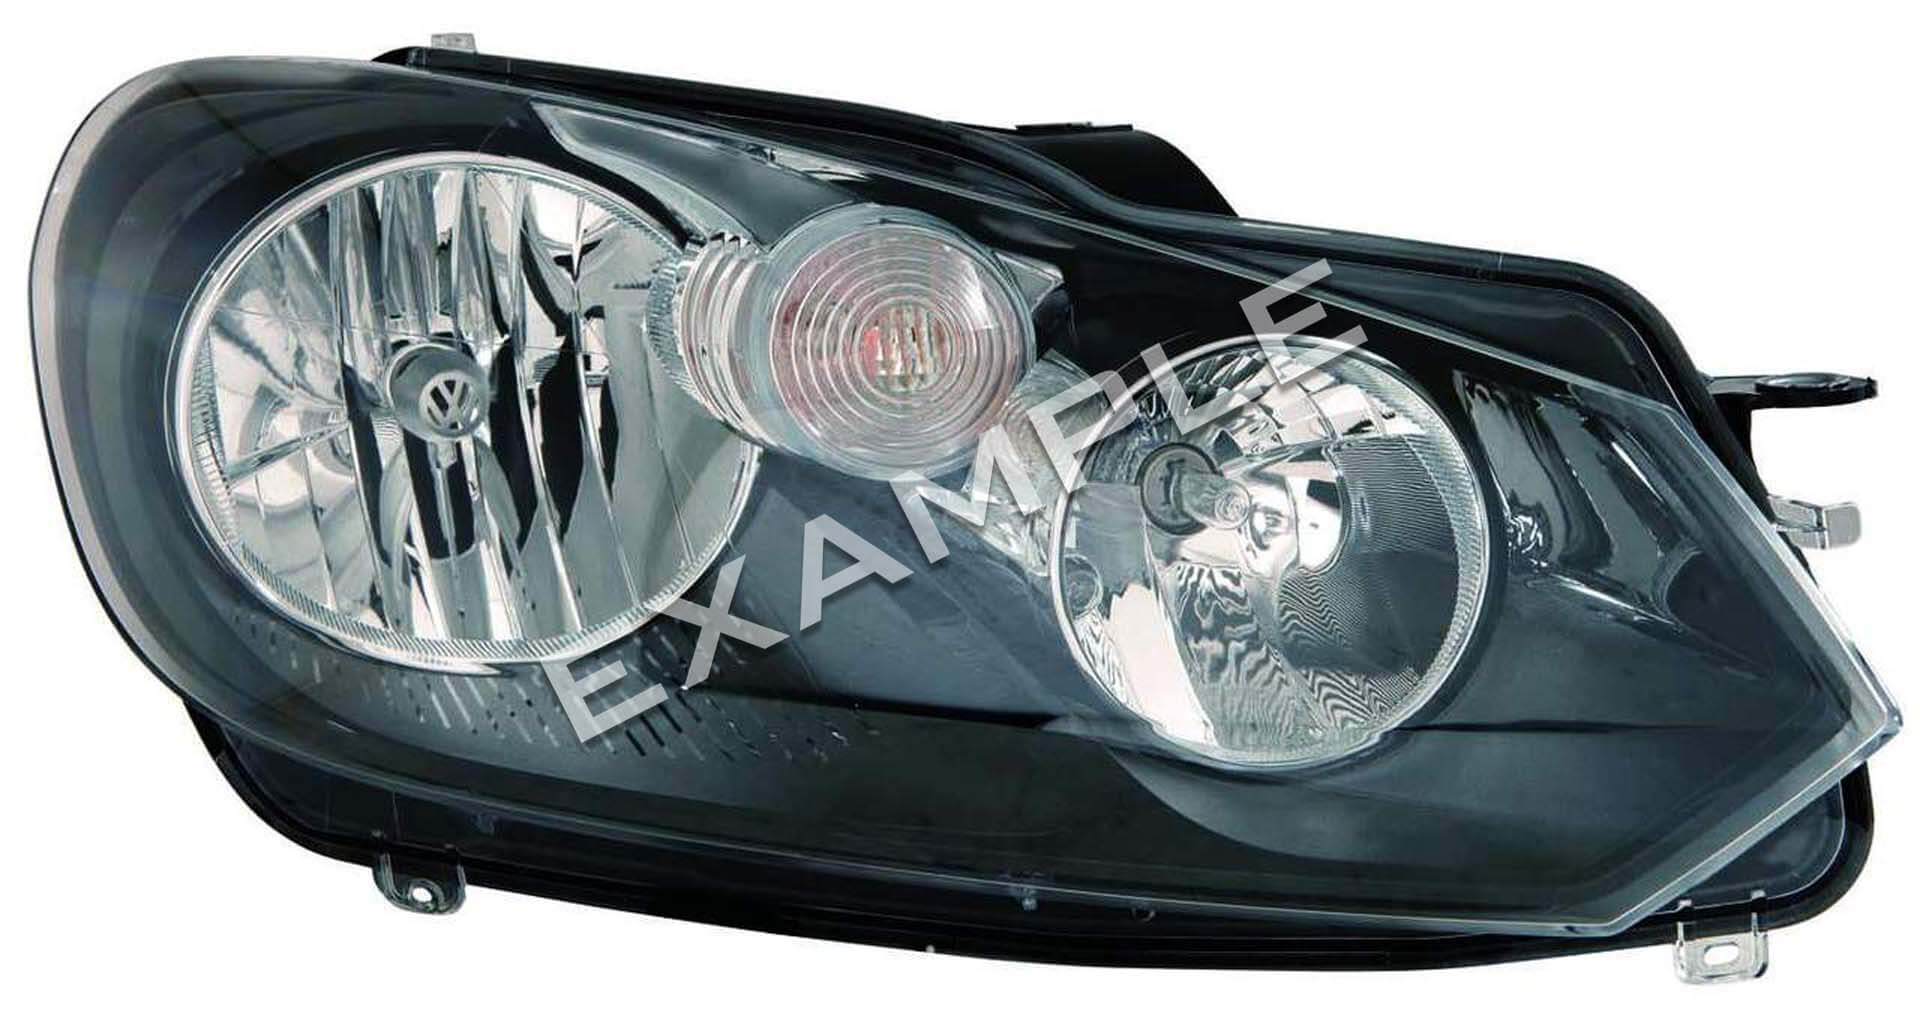 VW Golf MK VII 12-17 bi-xenon light upgrade kit pour phares halogènes